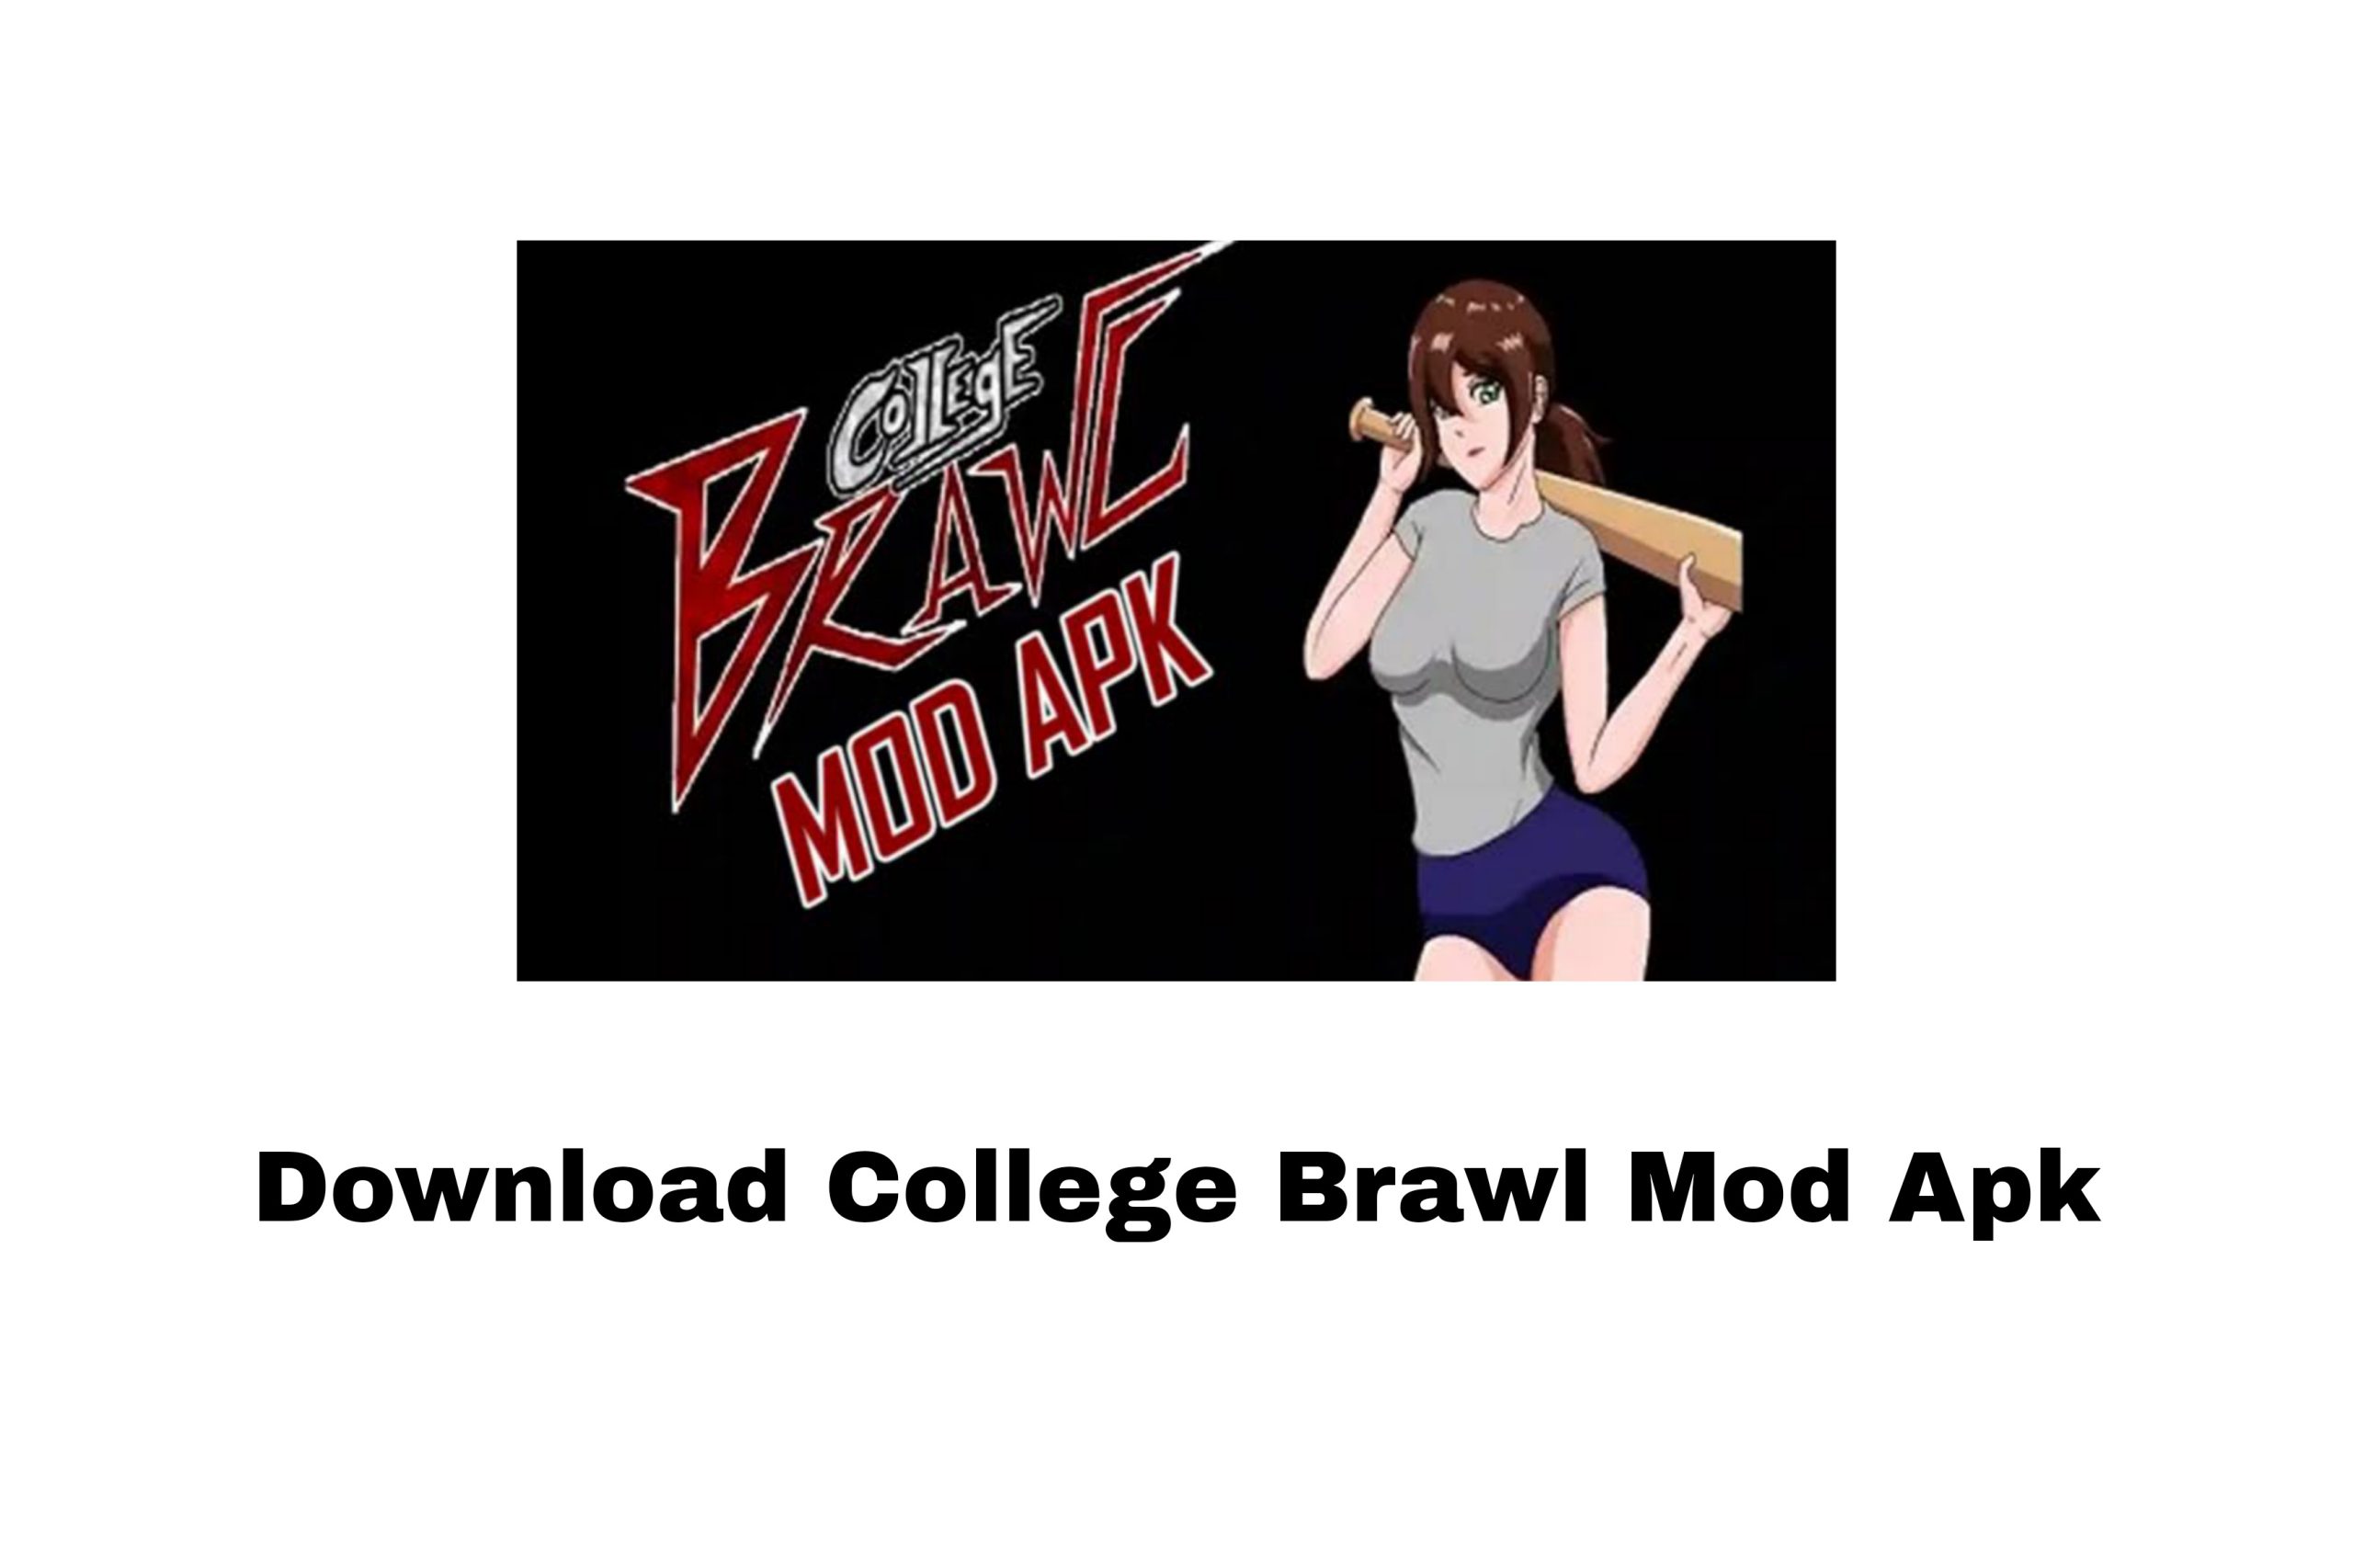 Download College Brawl Mod Apk